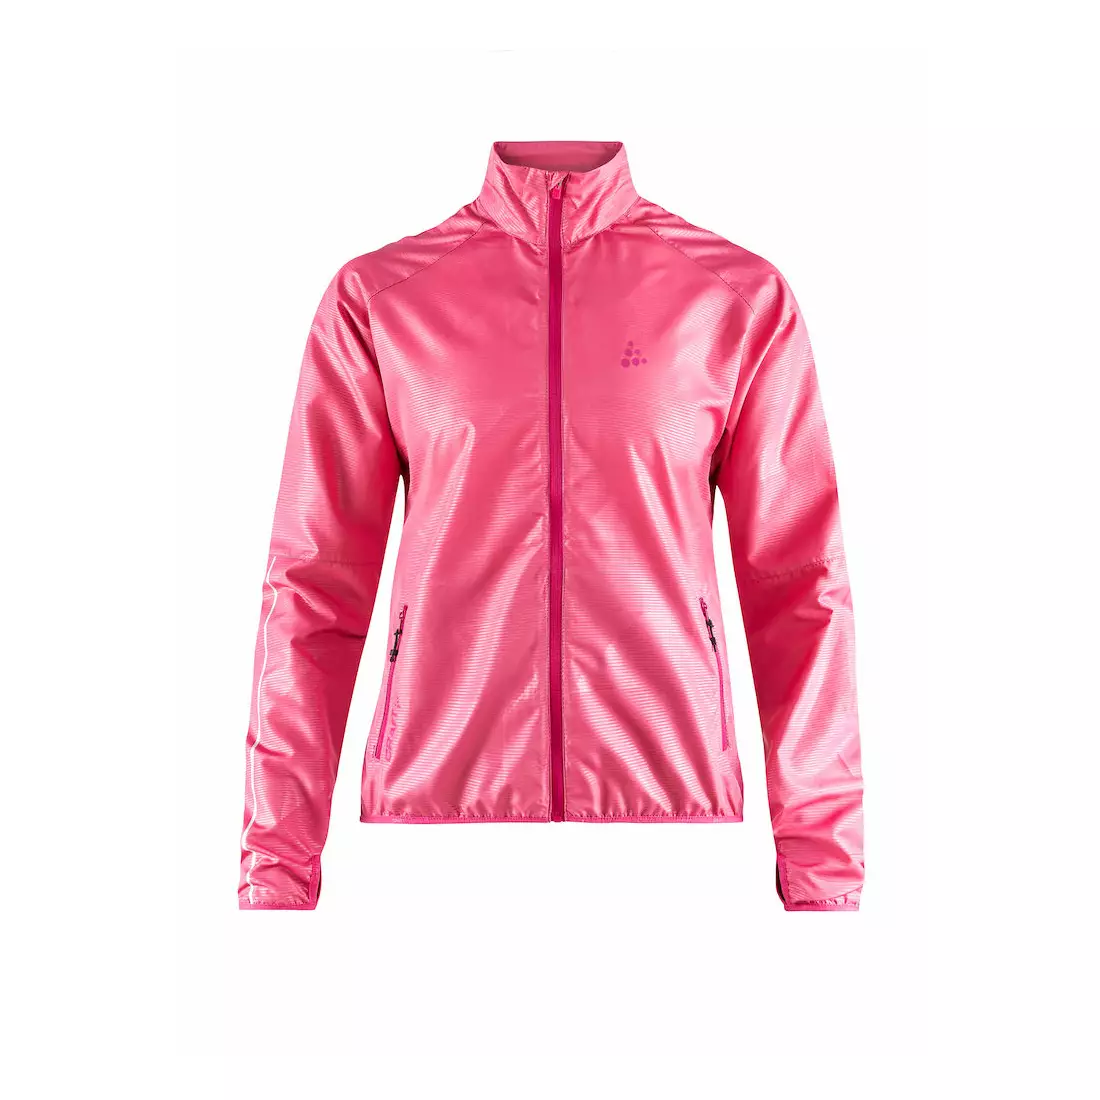 CRAFT EAZE lehká běžecká bunda, dámská, růžová 1906401-720000